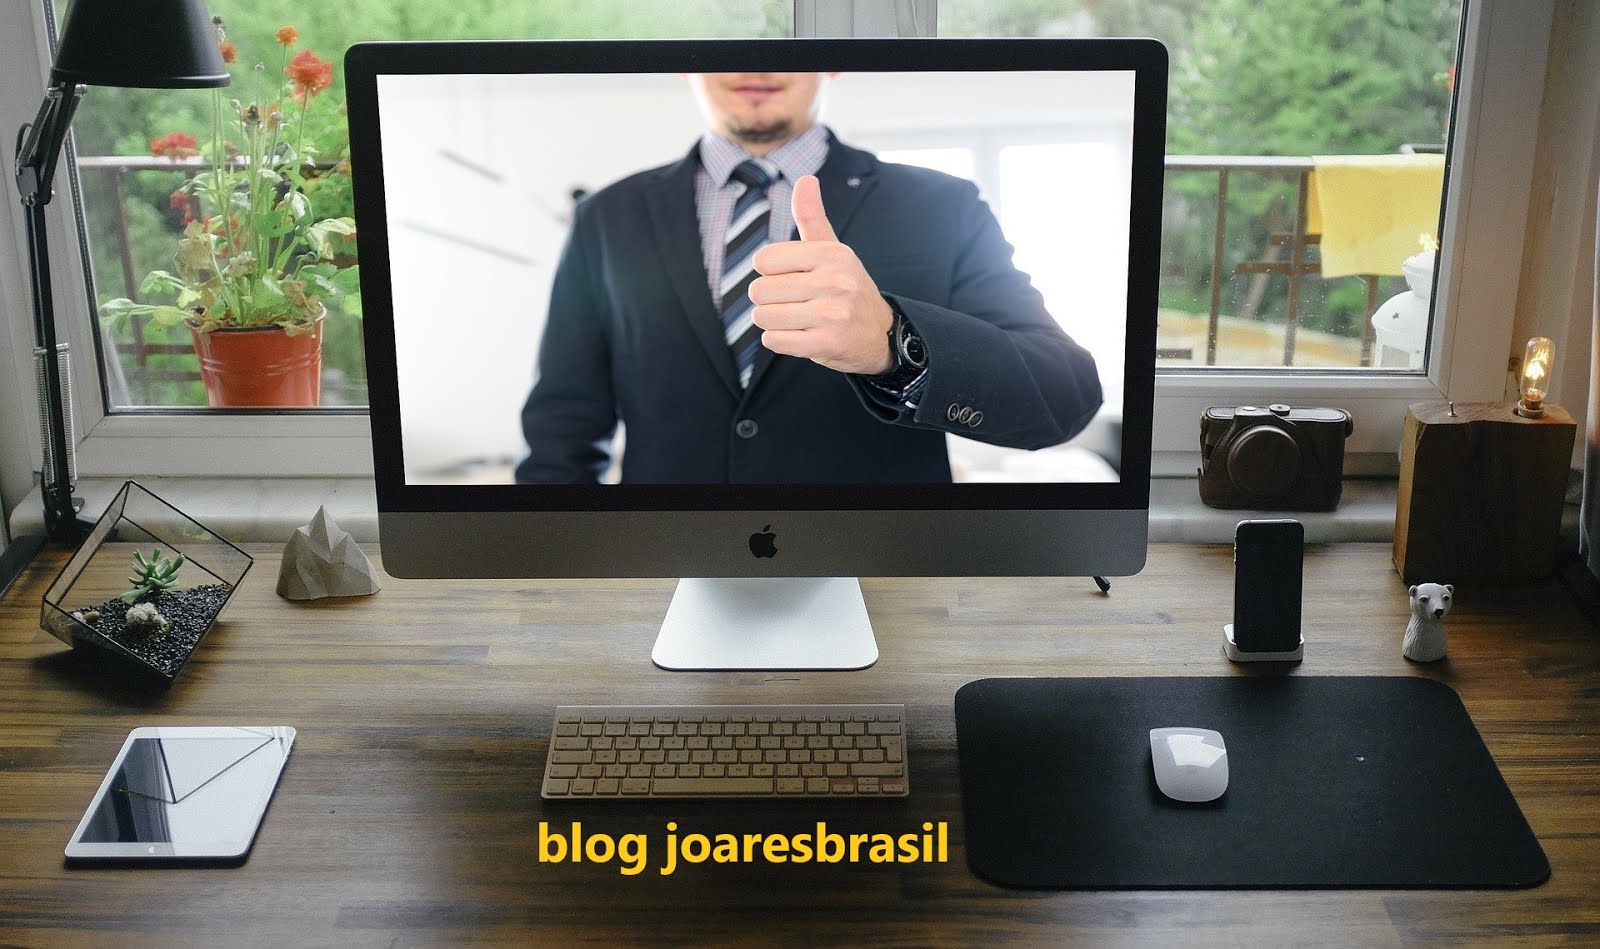 blog joaresbrasil